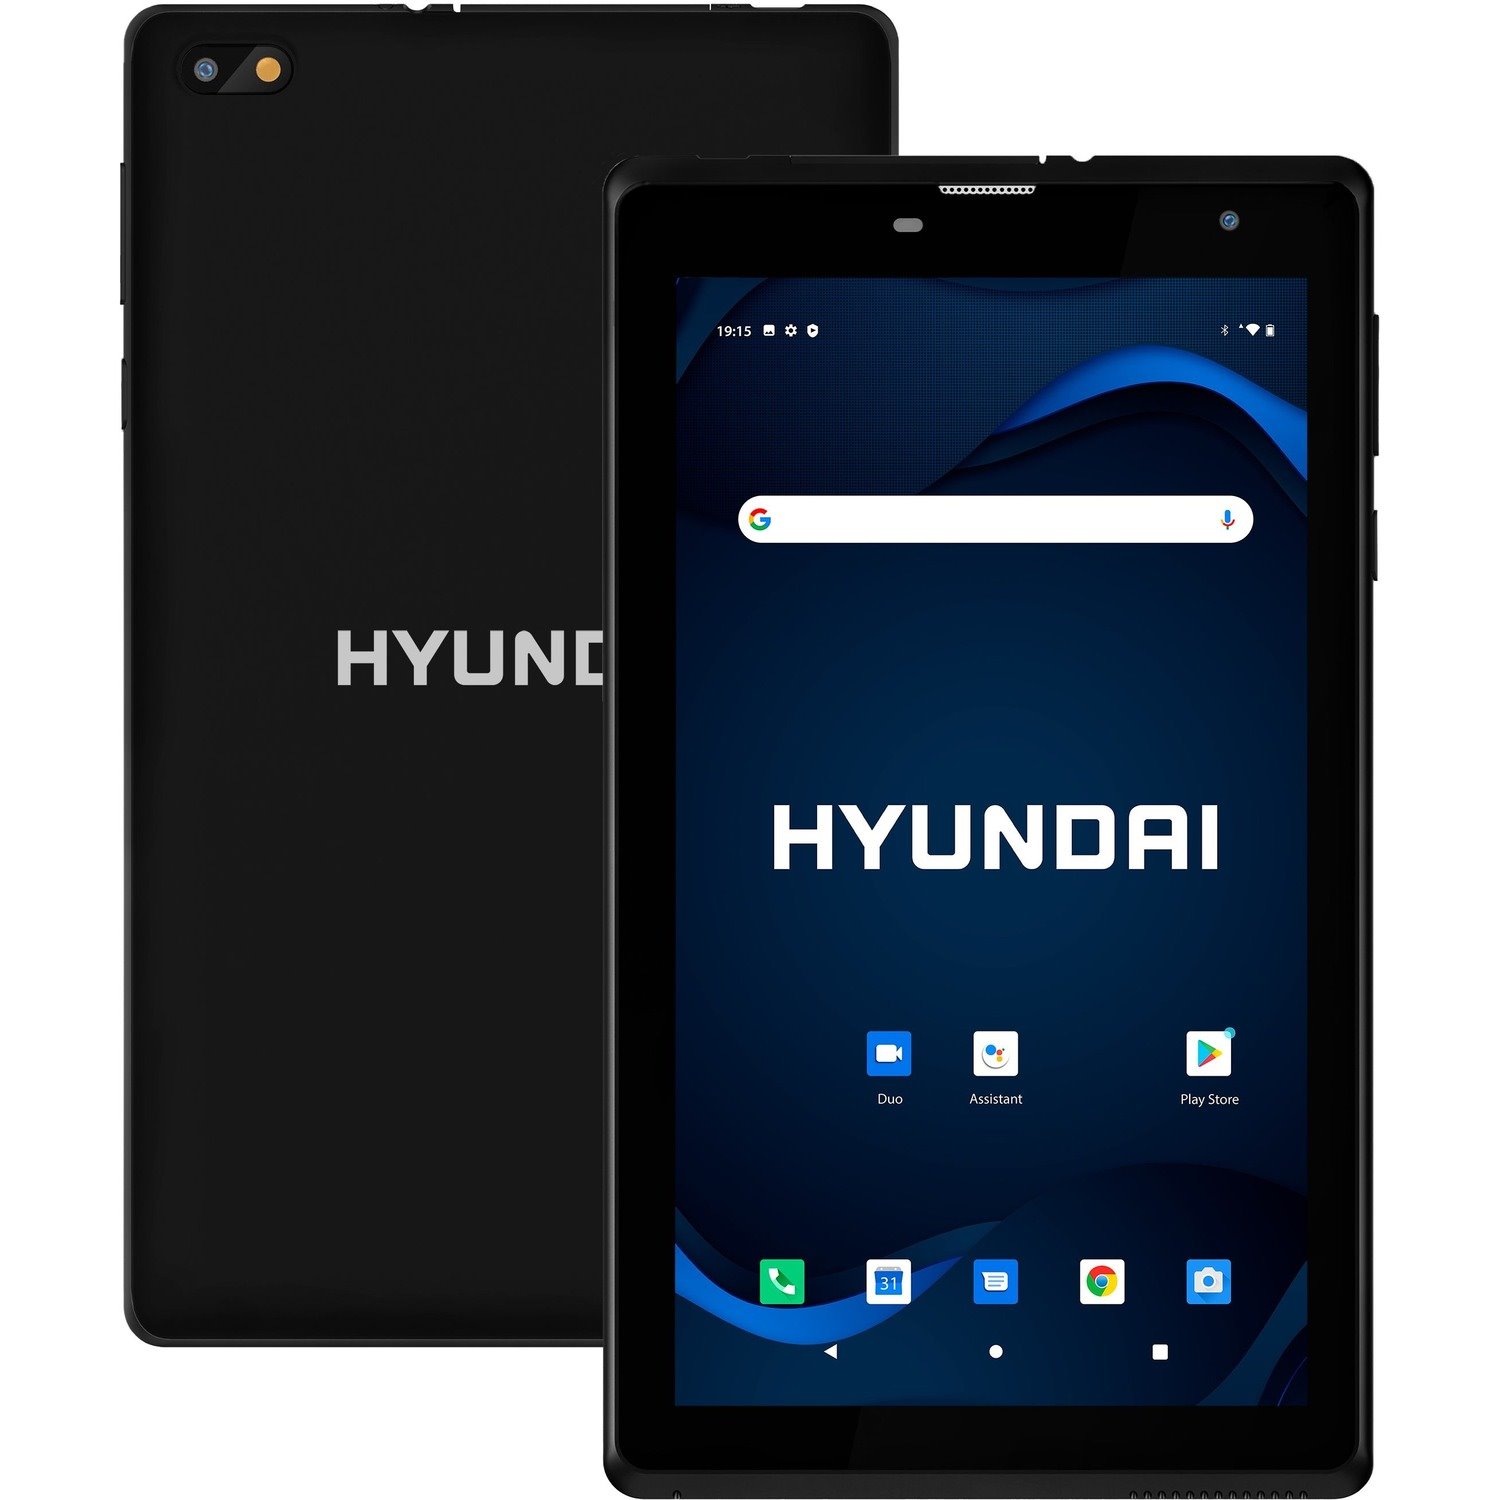 Hyundai HyTab 7LC1, 7" Tablet, 1024x600 IPS, Android 10 Go edition, Quad-Core Processor, 1GB RAM, 32GB Storage, 2MP/2MP, LTE - Black